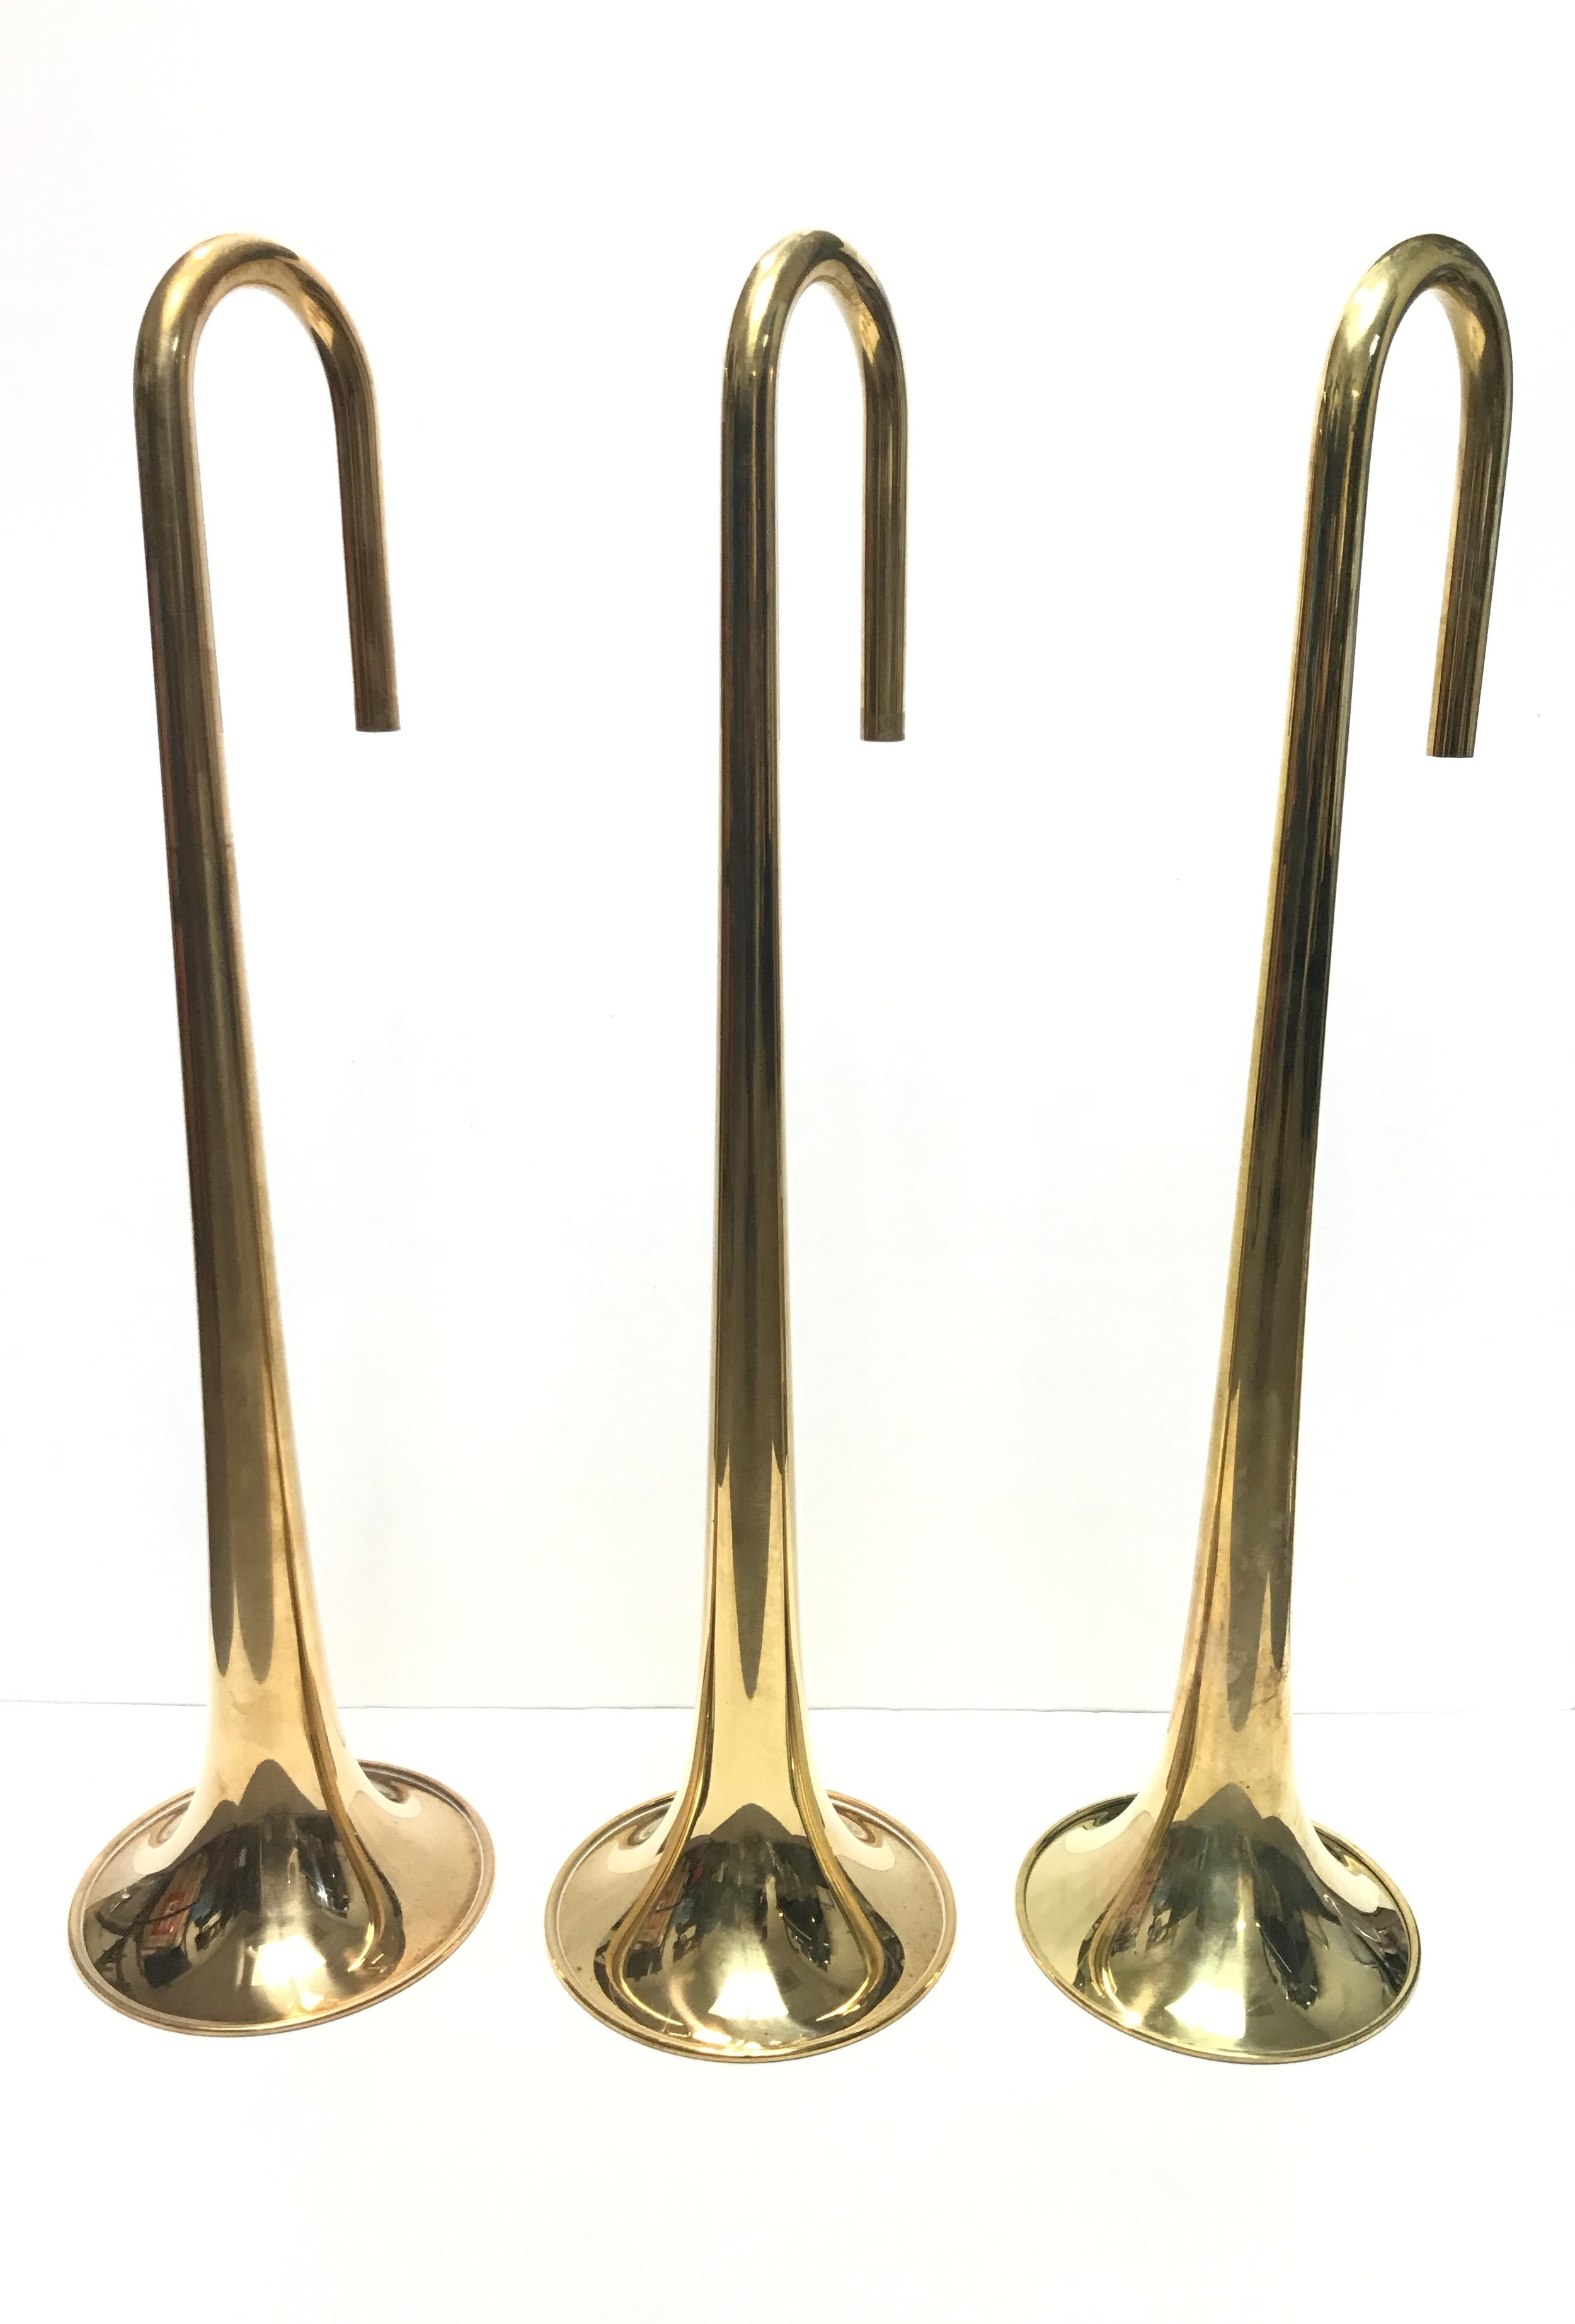 Standard Series Trumpets — Thane Trumpets